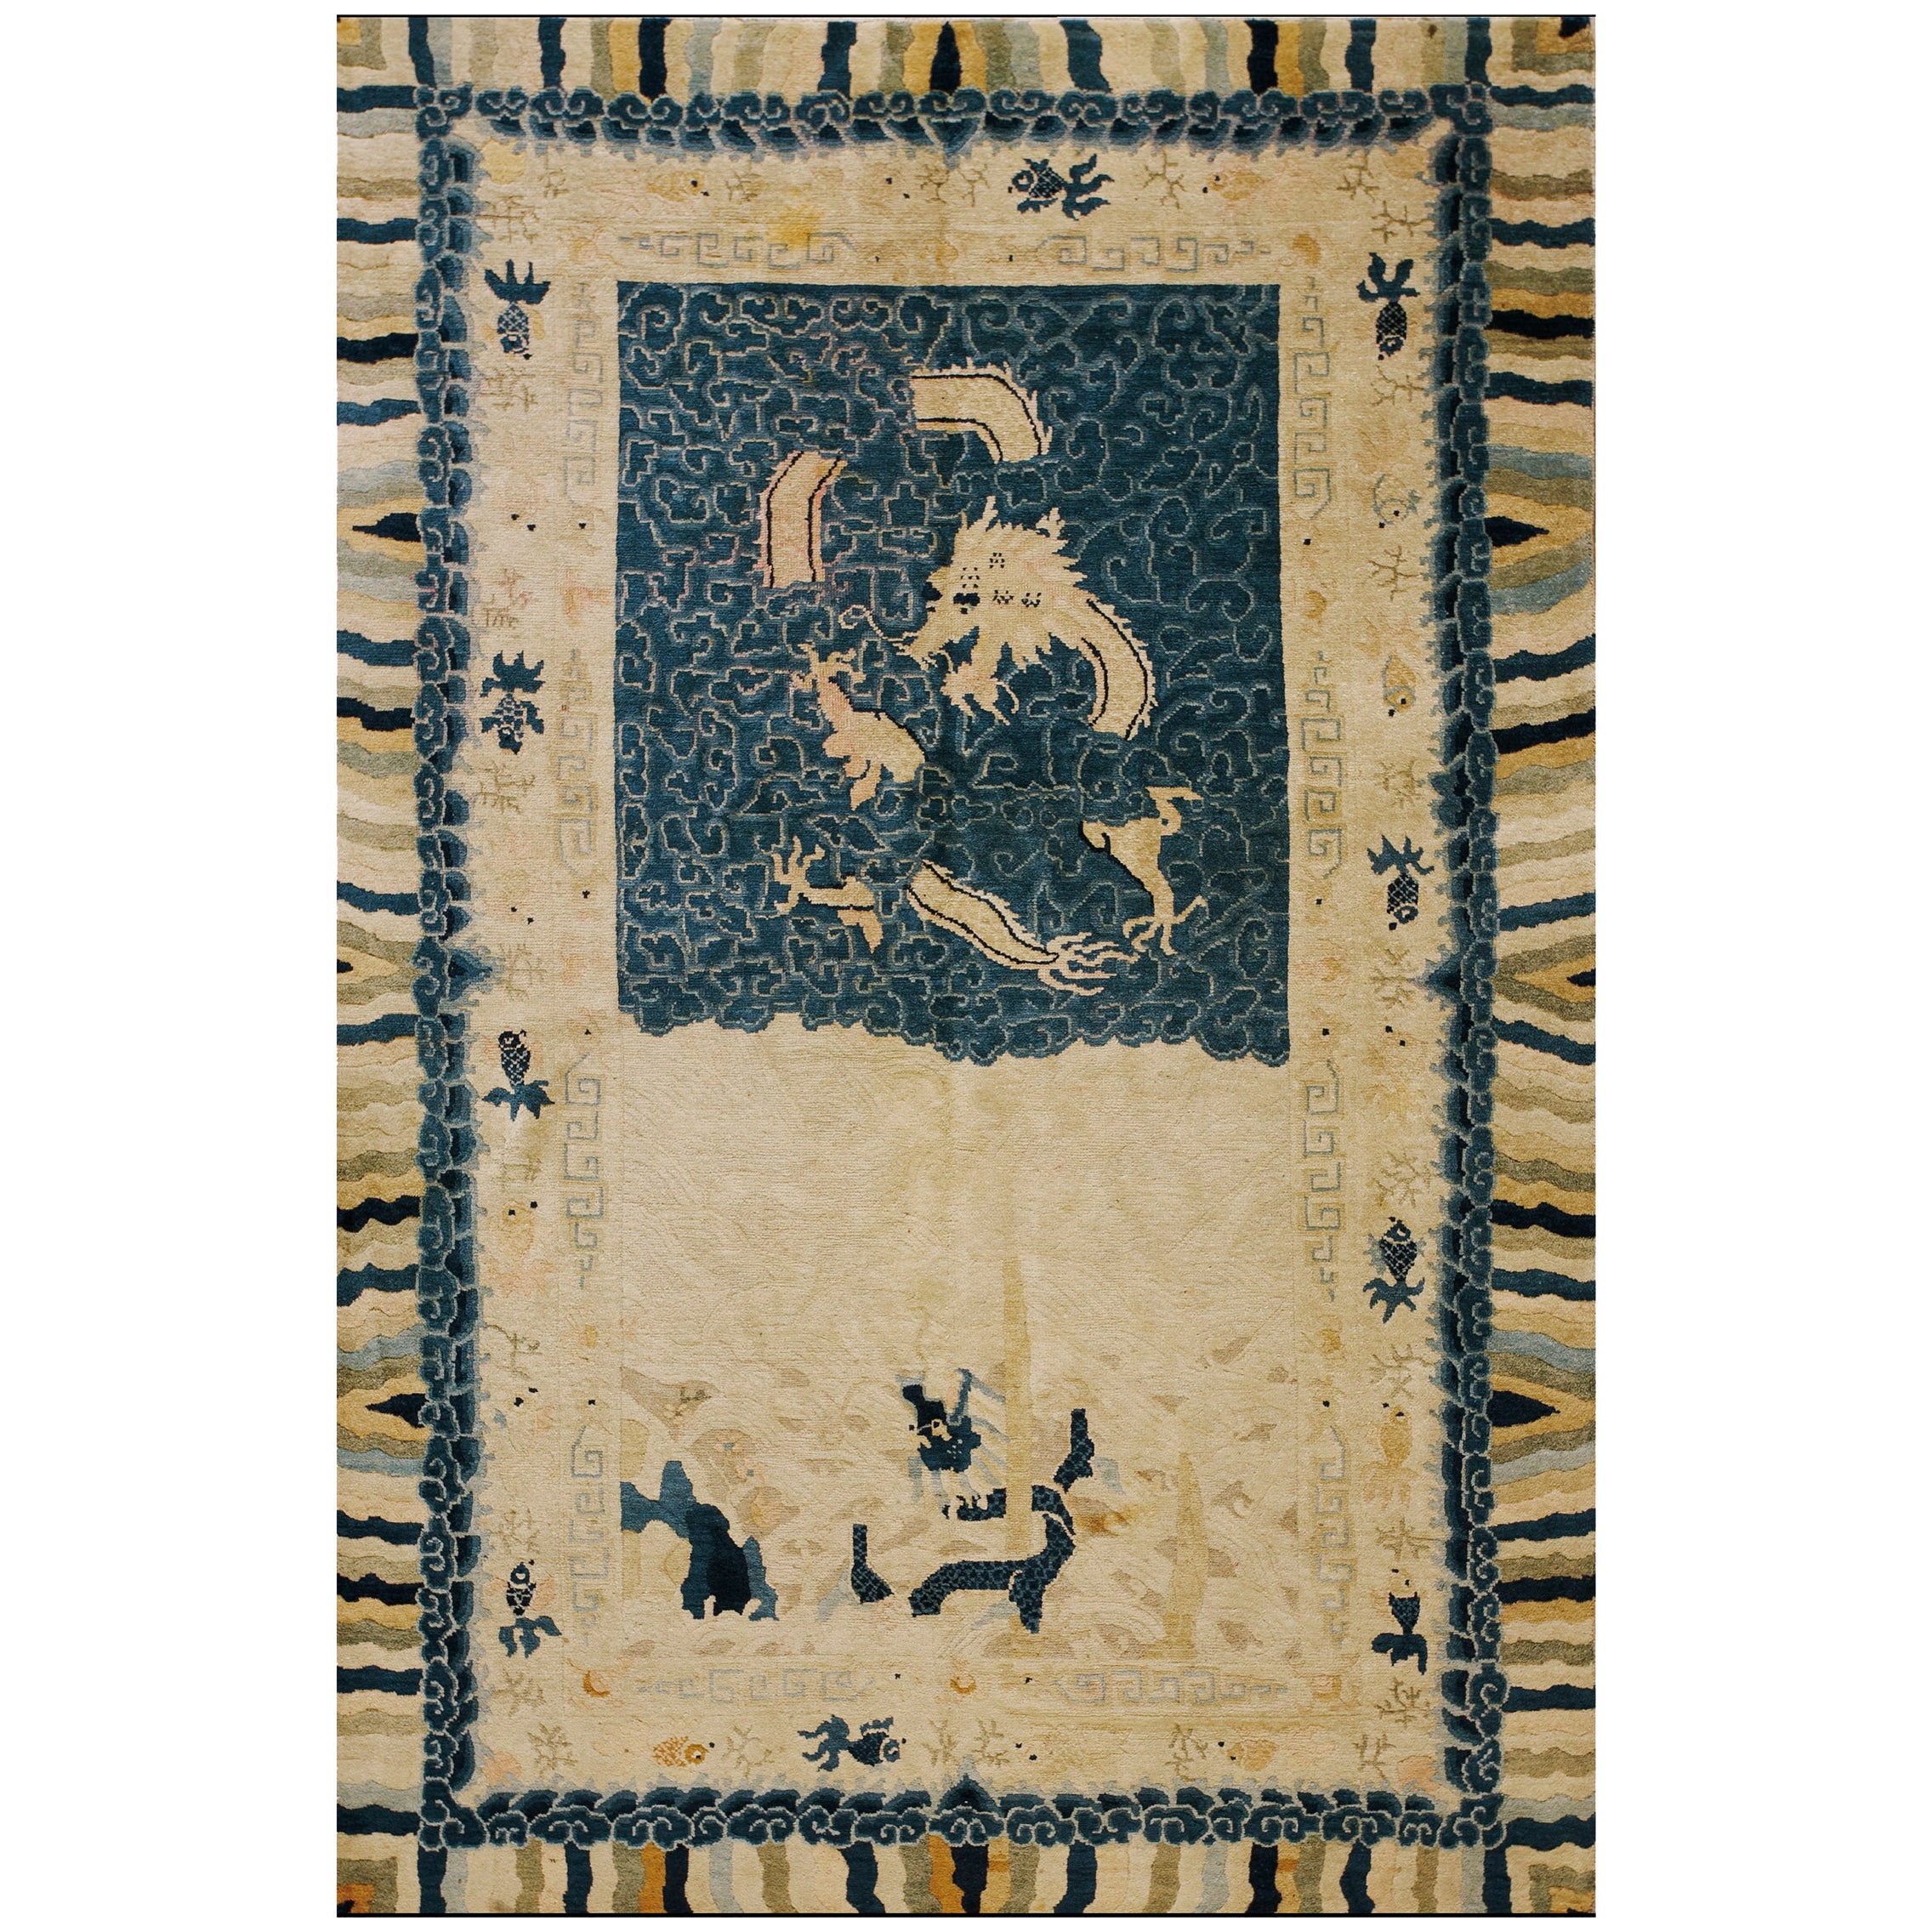 Late 19th Century Chinese Peking Dragon Carpet ( 5' x 7'8" - 152 x 233 )